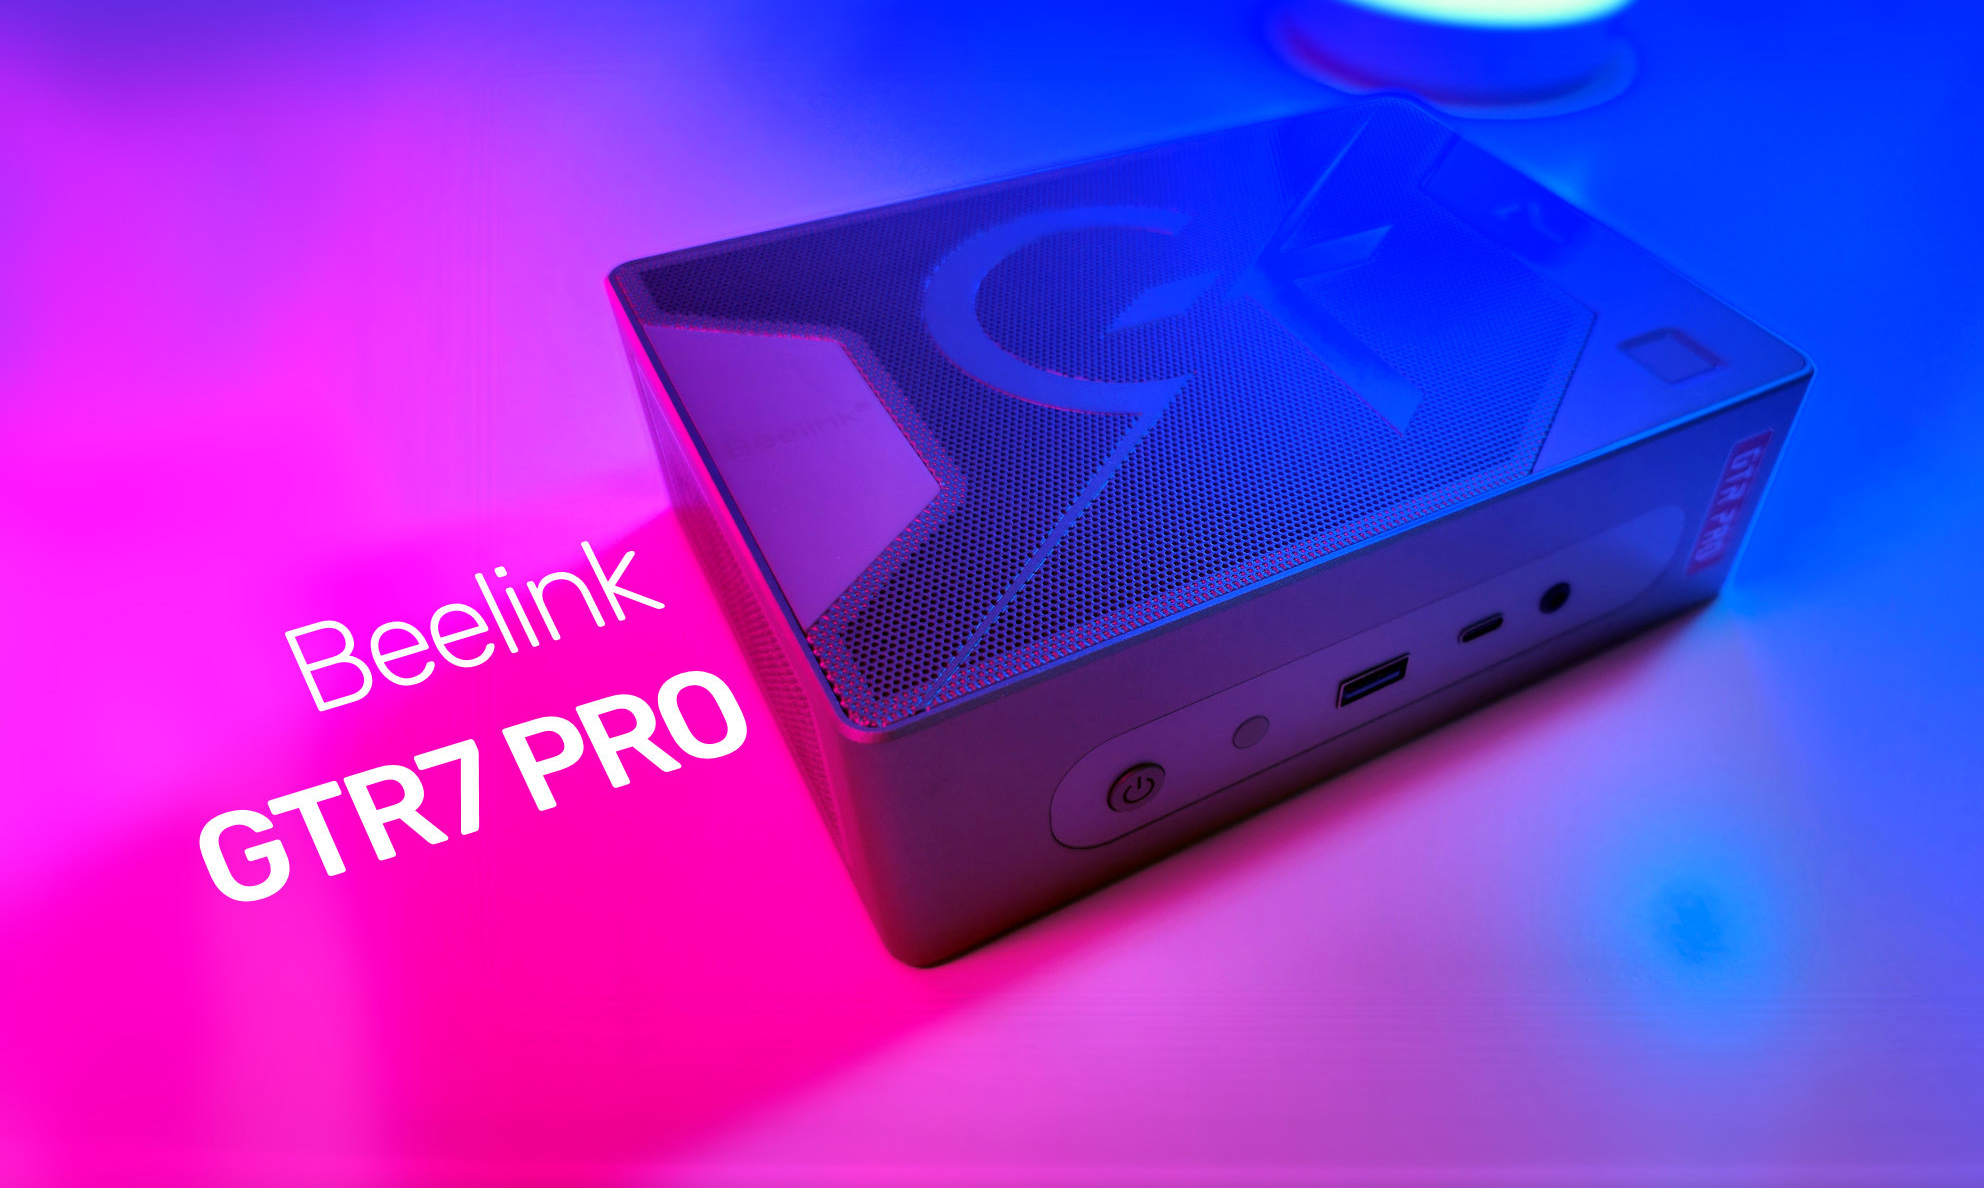 Beelink Introducing SER6 MAX 65W High Performance Gaming Mini PC